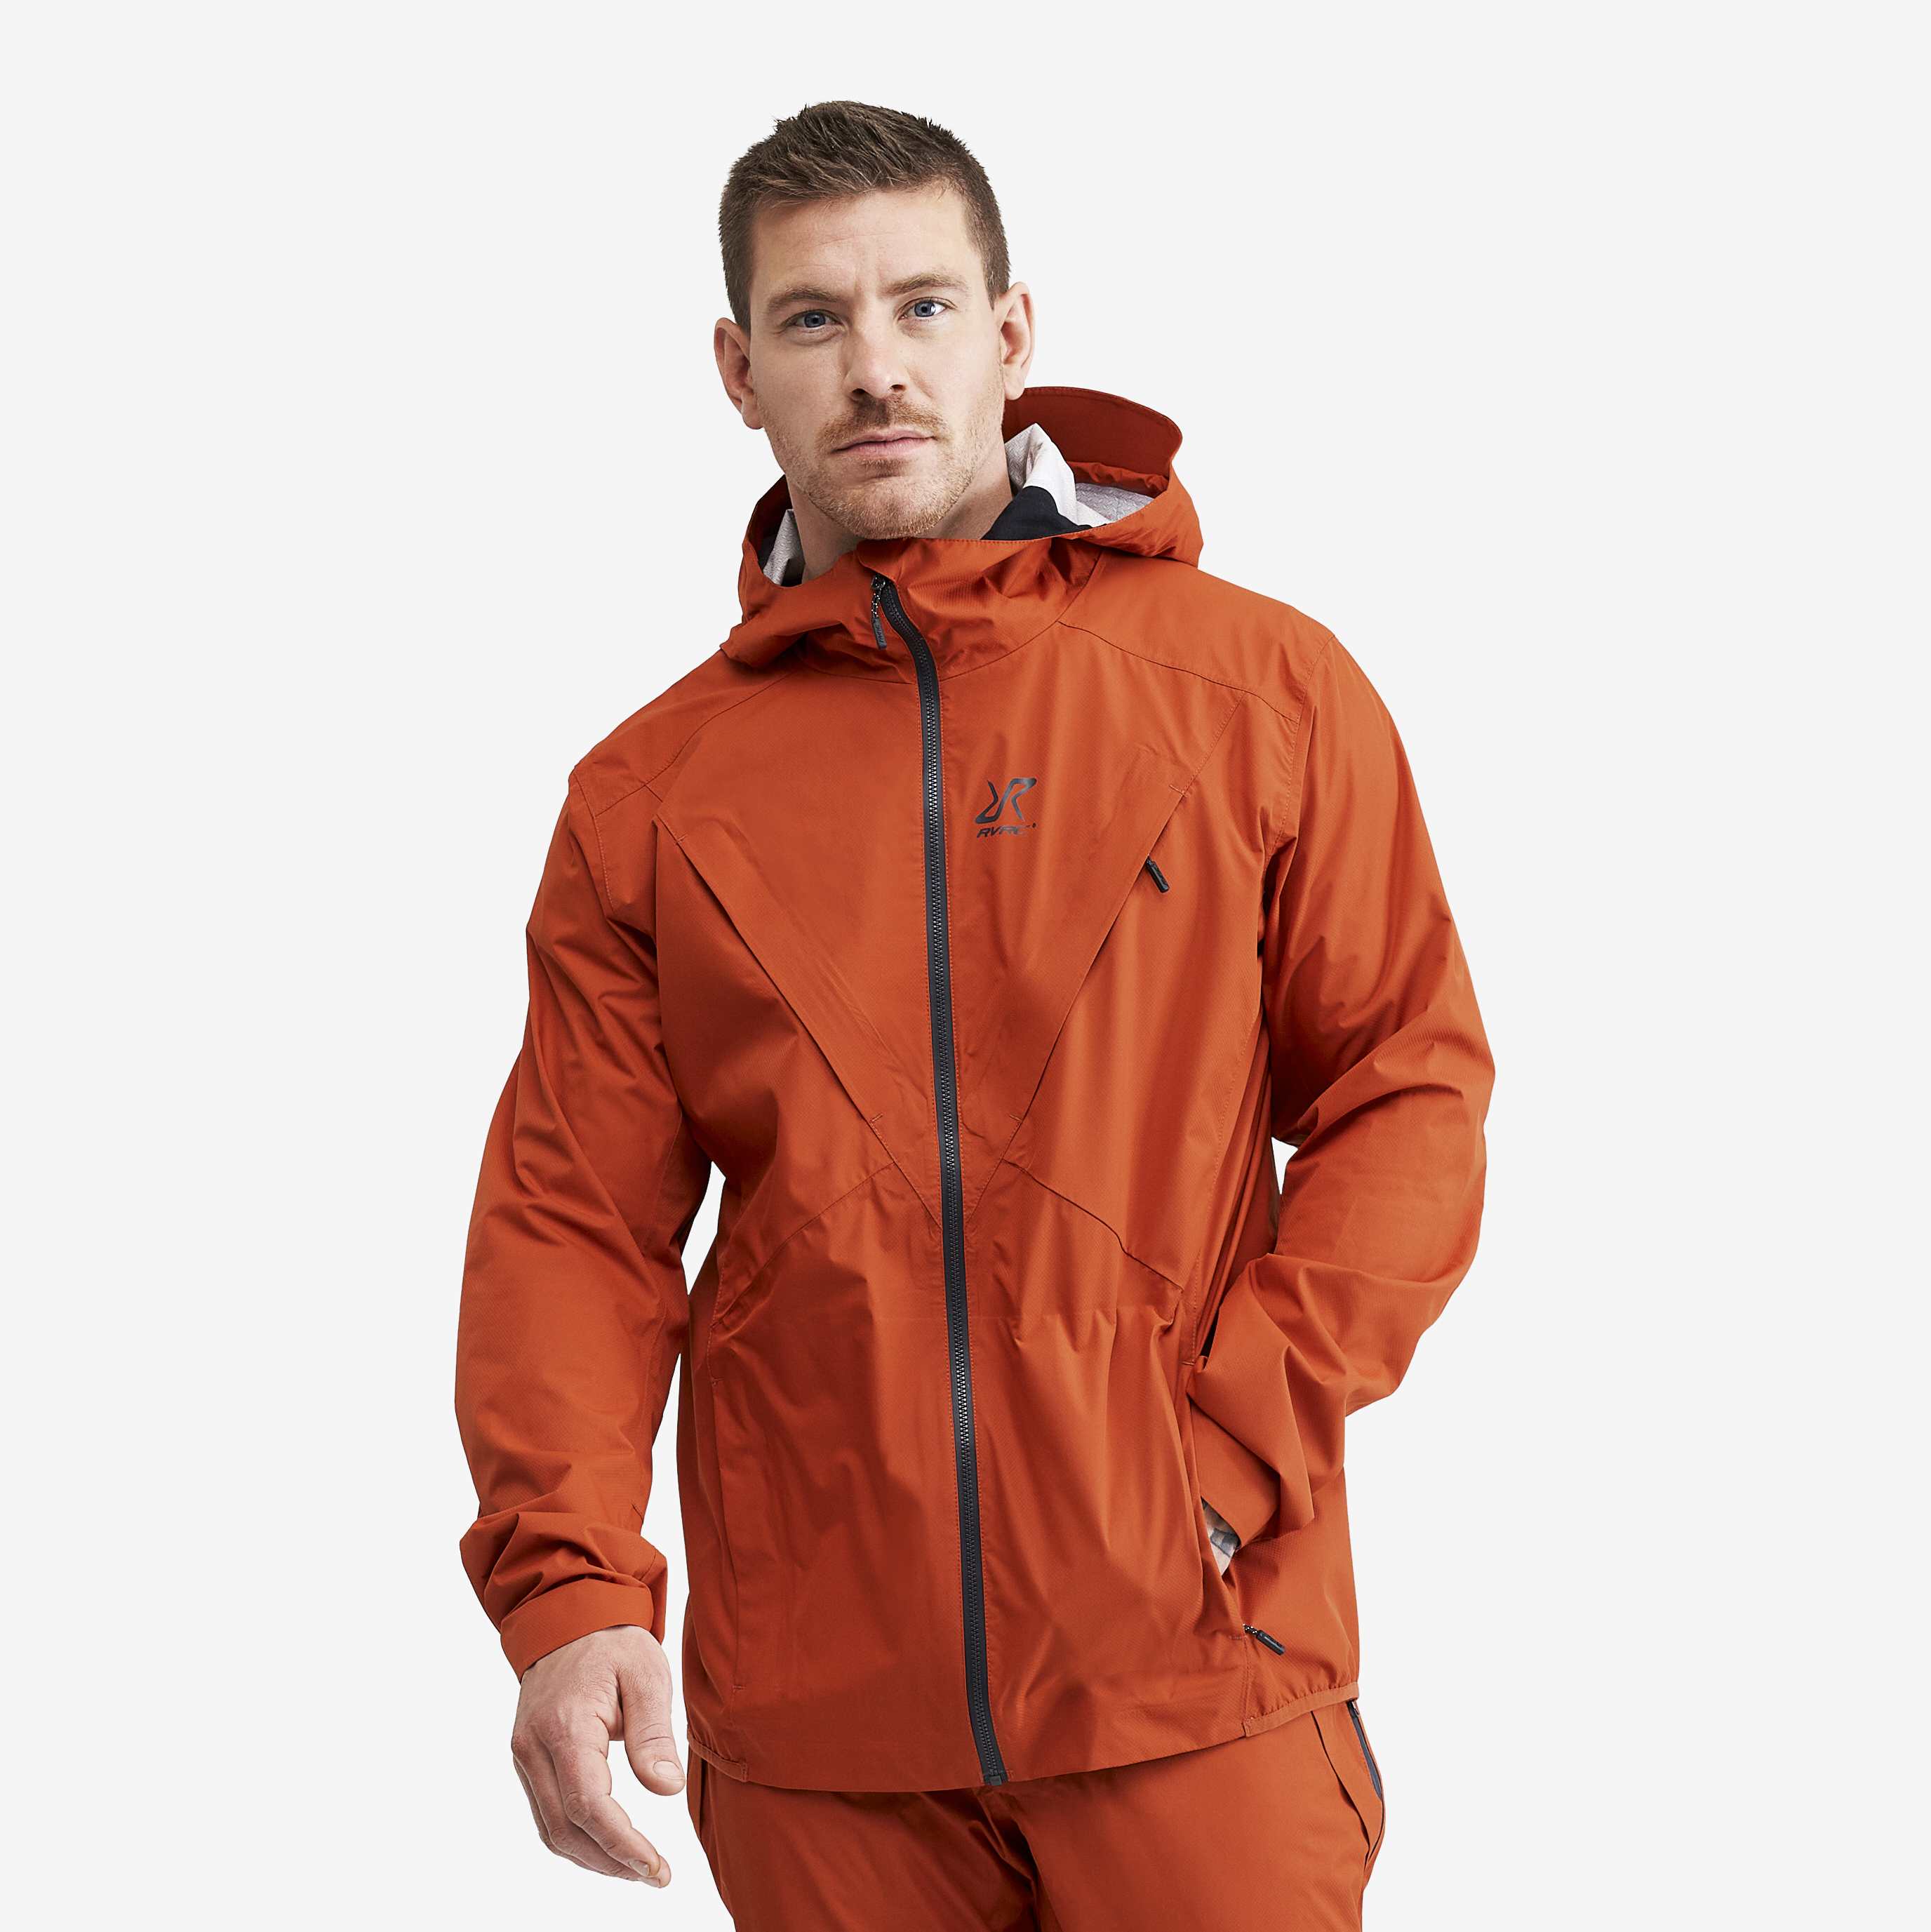 Typhoon waterproof jacket for men in orange